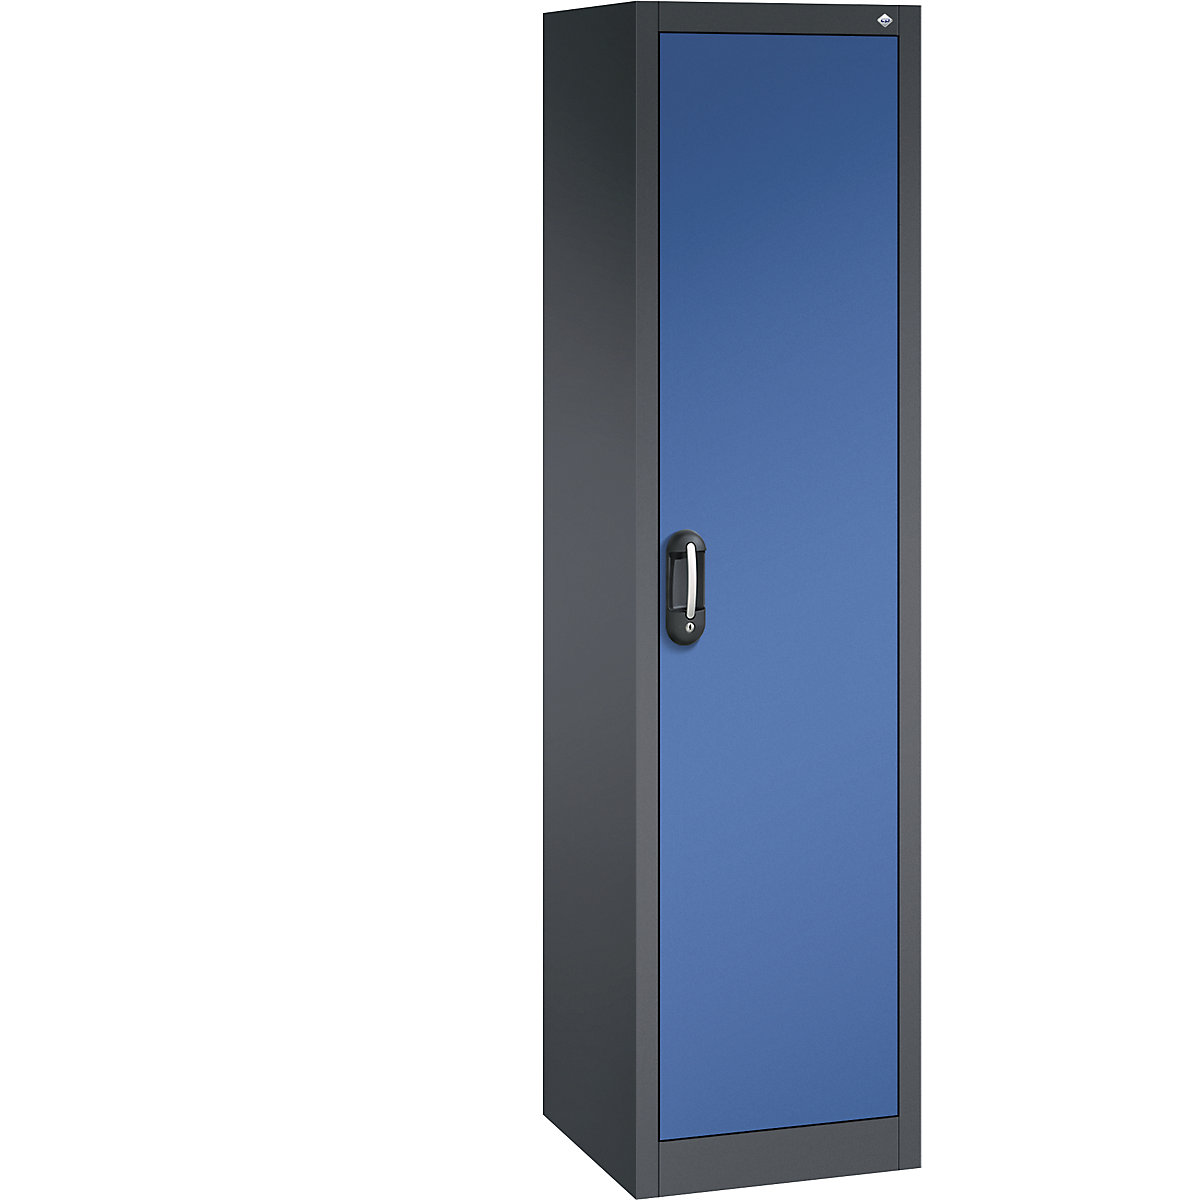 C+P – ACURADO universal cupboard, WxD 500 x 500 mm, black grey / gentian blue